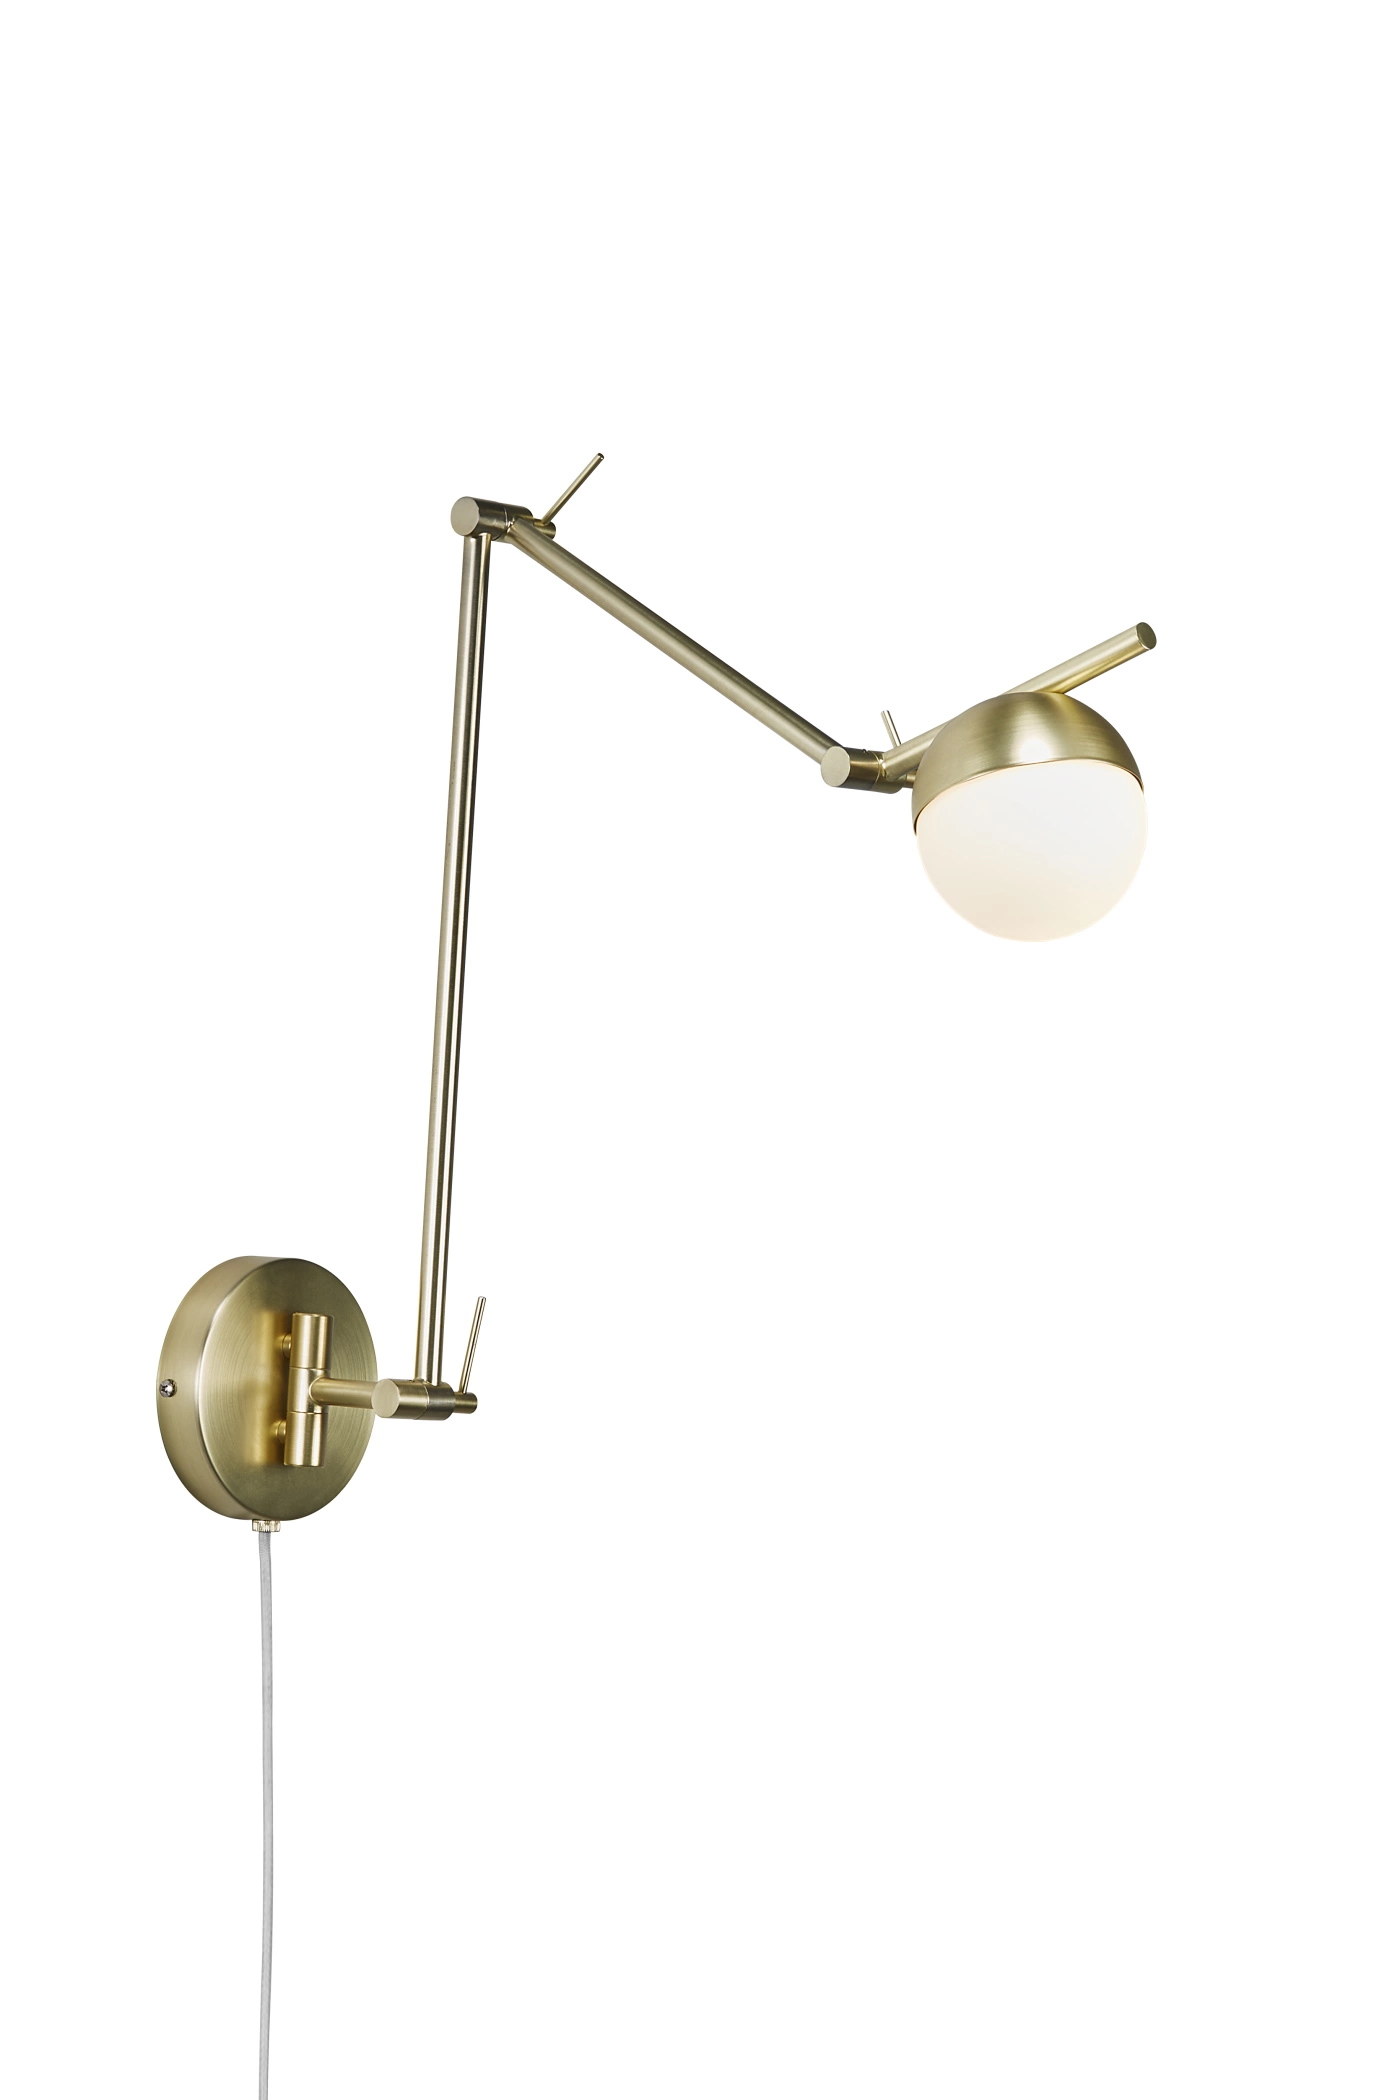   
                        
                        Бра NORDLUX (Дания) 51180    
                         в стиле Хай-тек.  
                        Тип источника света: светодиодная лампа, сменная.                                                 Цвета плафонов и подвесок: Белый.                         Материал: Стекло.                          фото 1